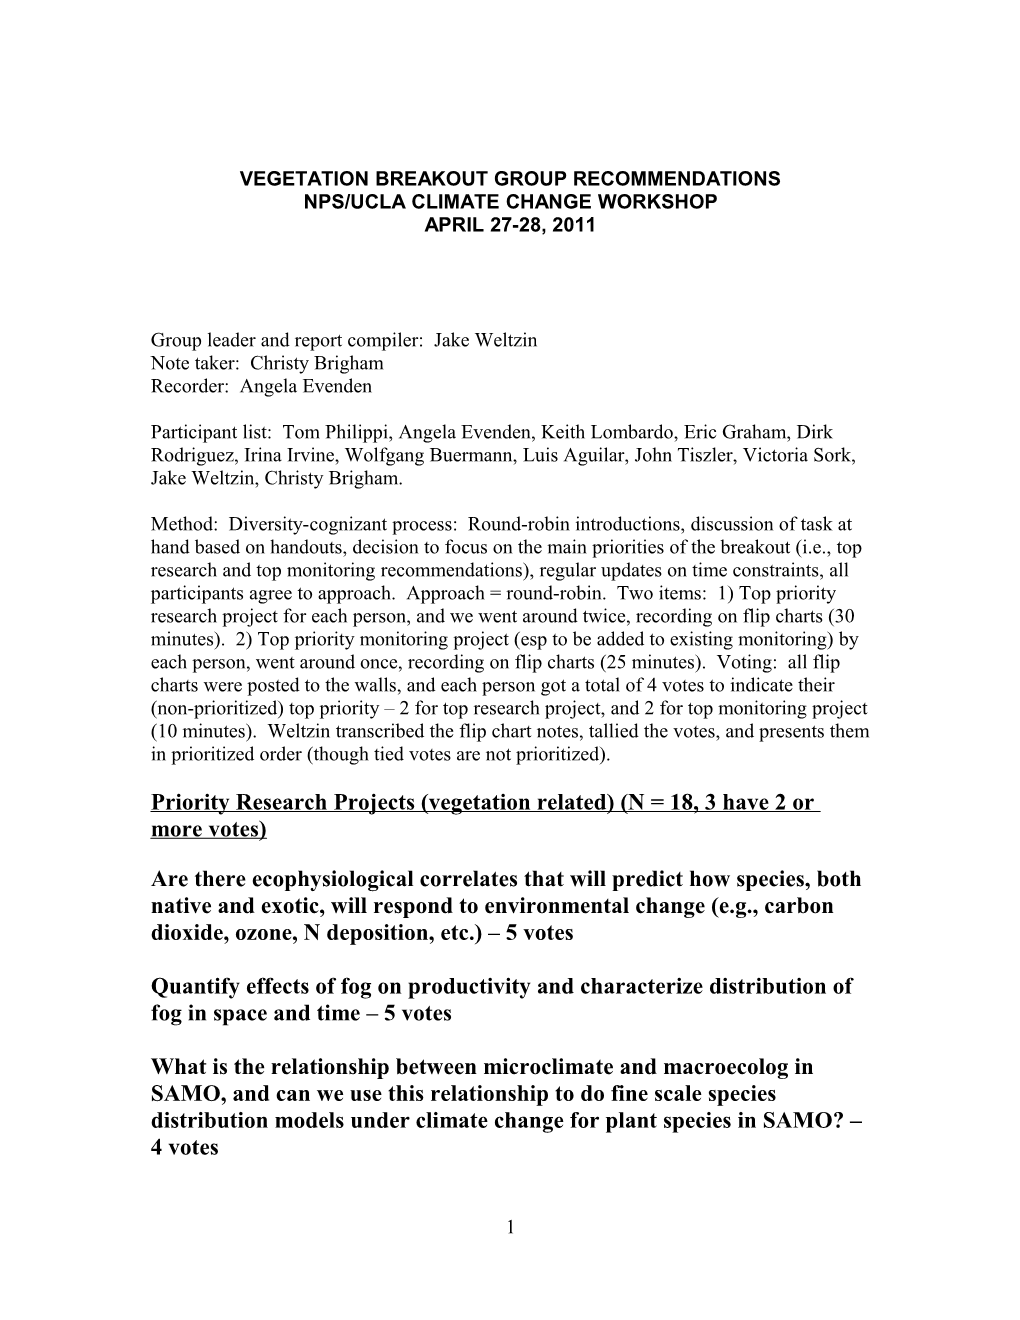 NPS-UCLA MEDN Joint Meeting, 28 April 2011, Vegetation Break-Out Group Report